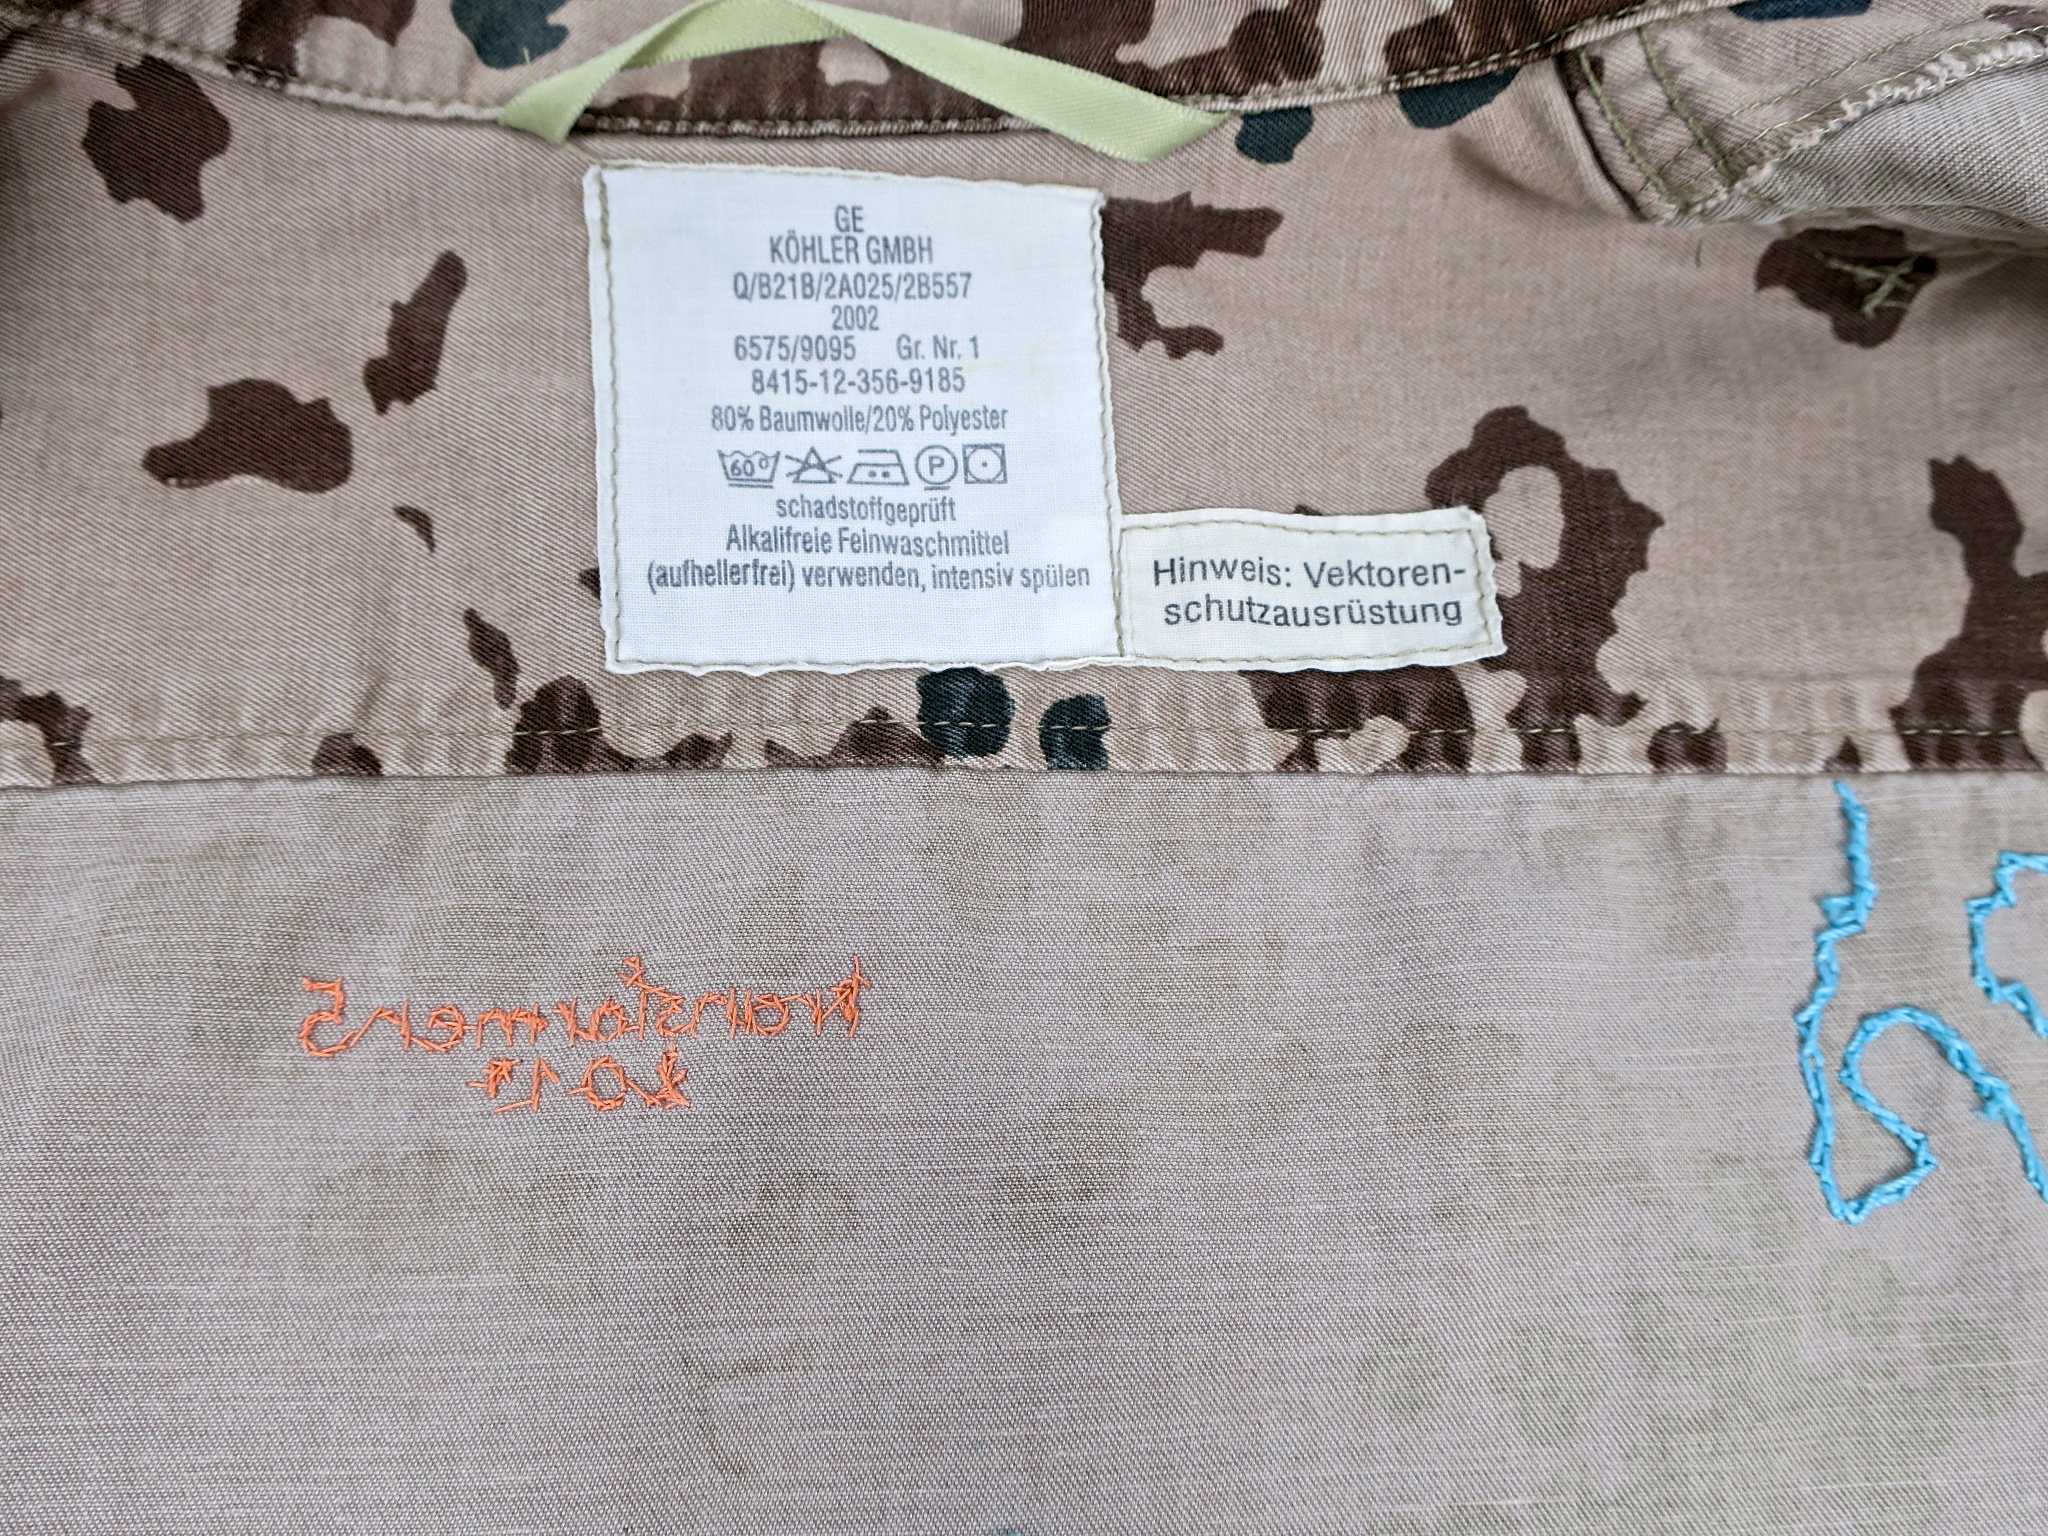 camouflage kaufmuseum München ökofashion ethicalfashion fairfashion slowfashion statement embroidery handgestickt ethical militärjacken camo kamouflage